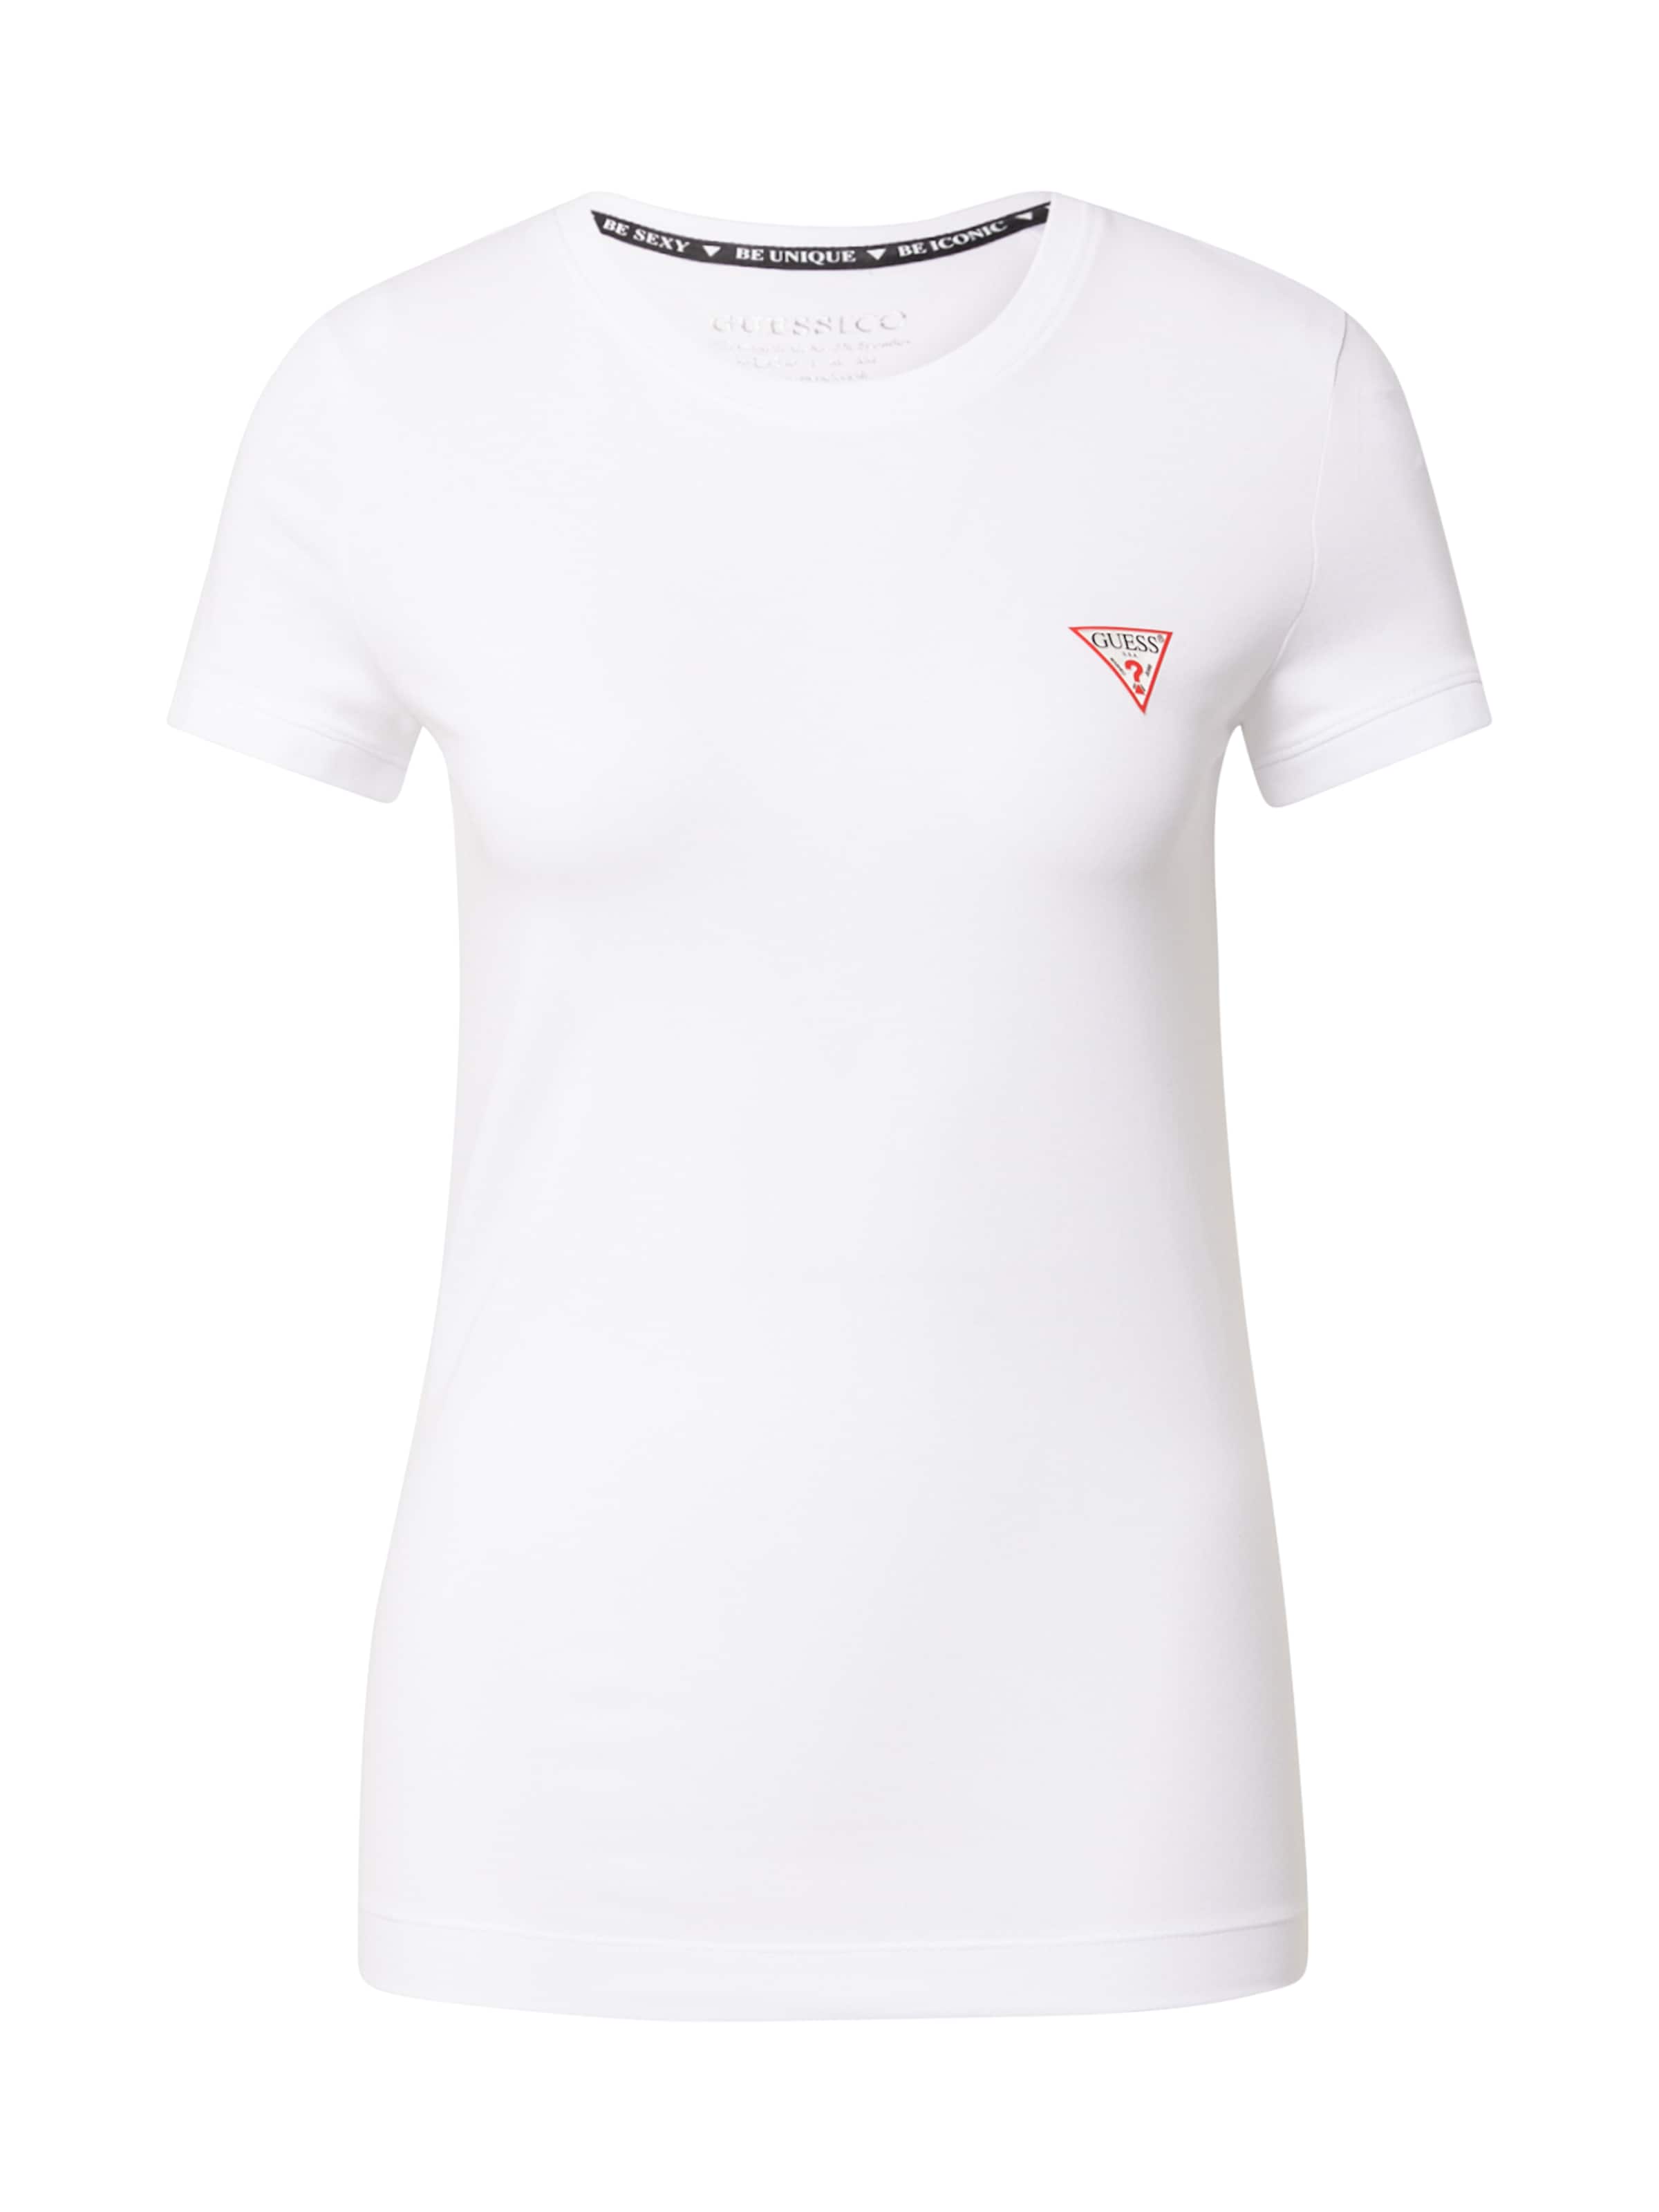 MODA DONNA Camicie & T-shirt T-shirt Basic Stradivarius T-shirt Bianco S sconto 73% 